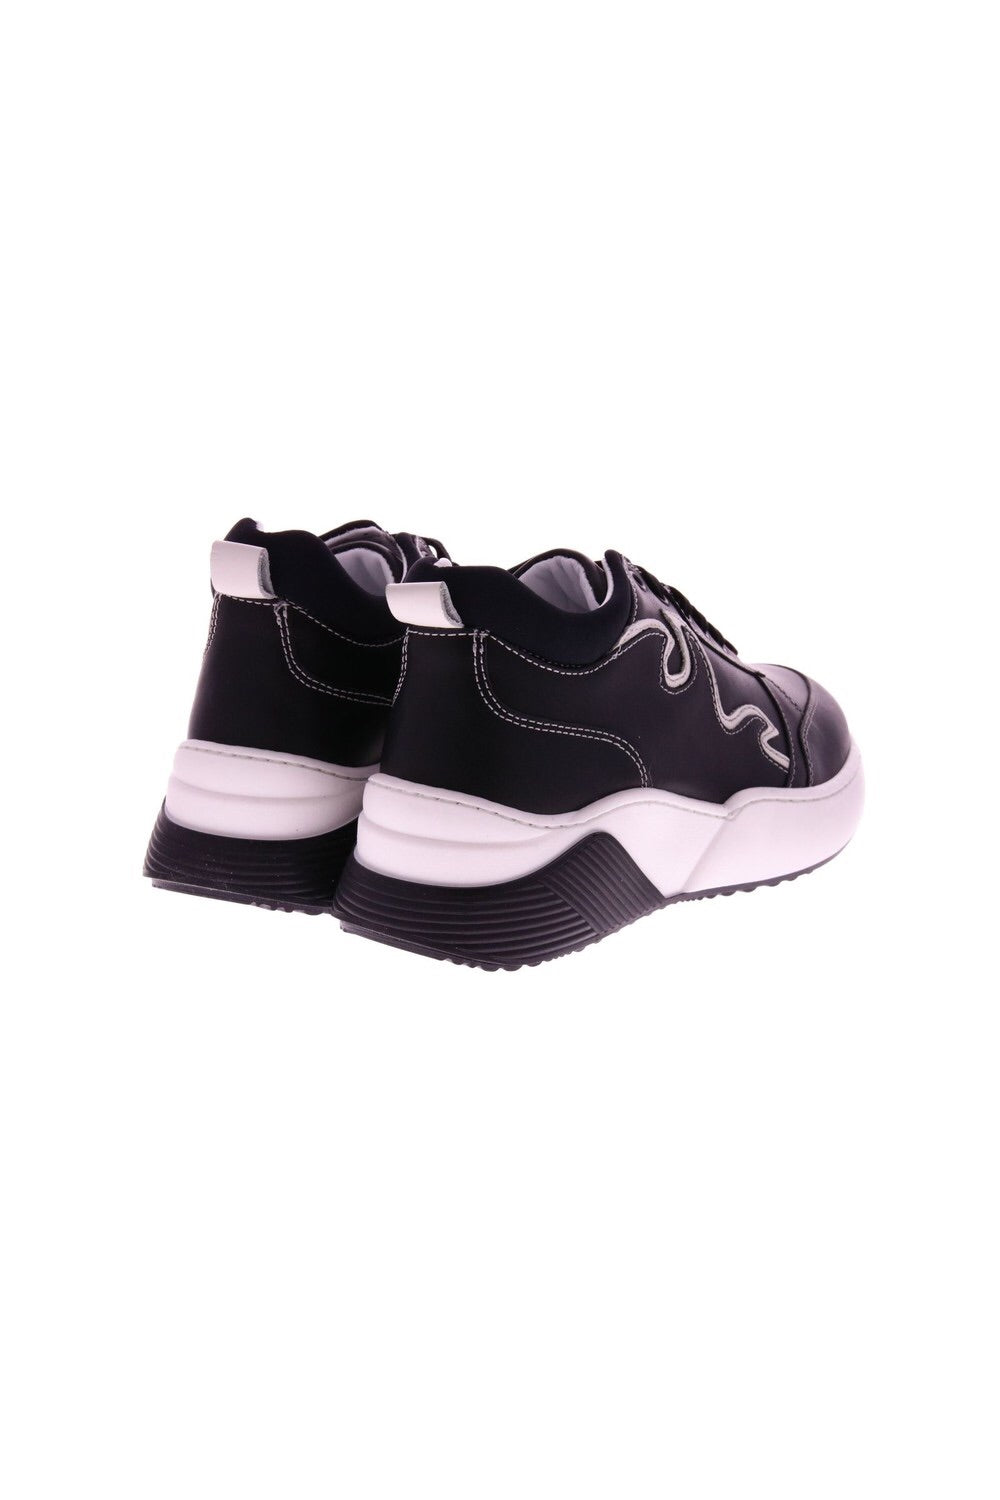 Fiamme - black/white leather sneaker